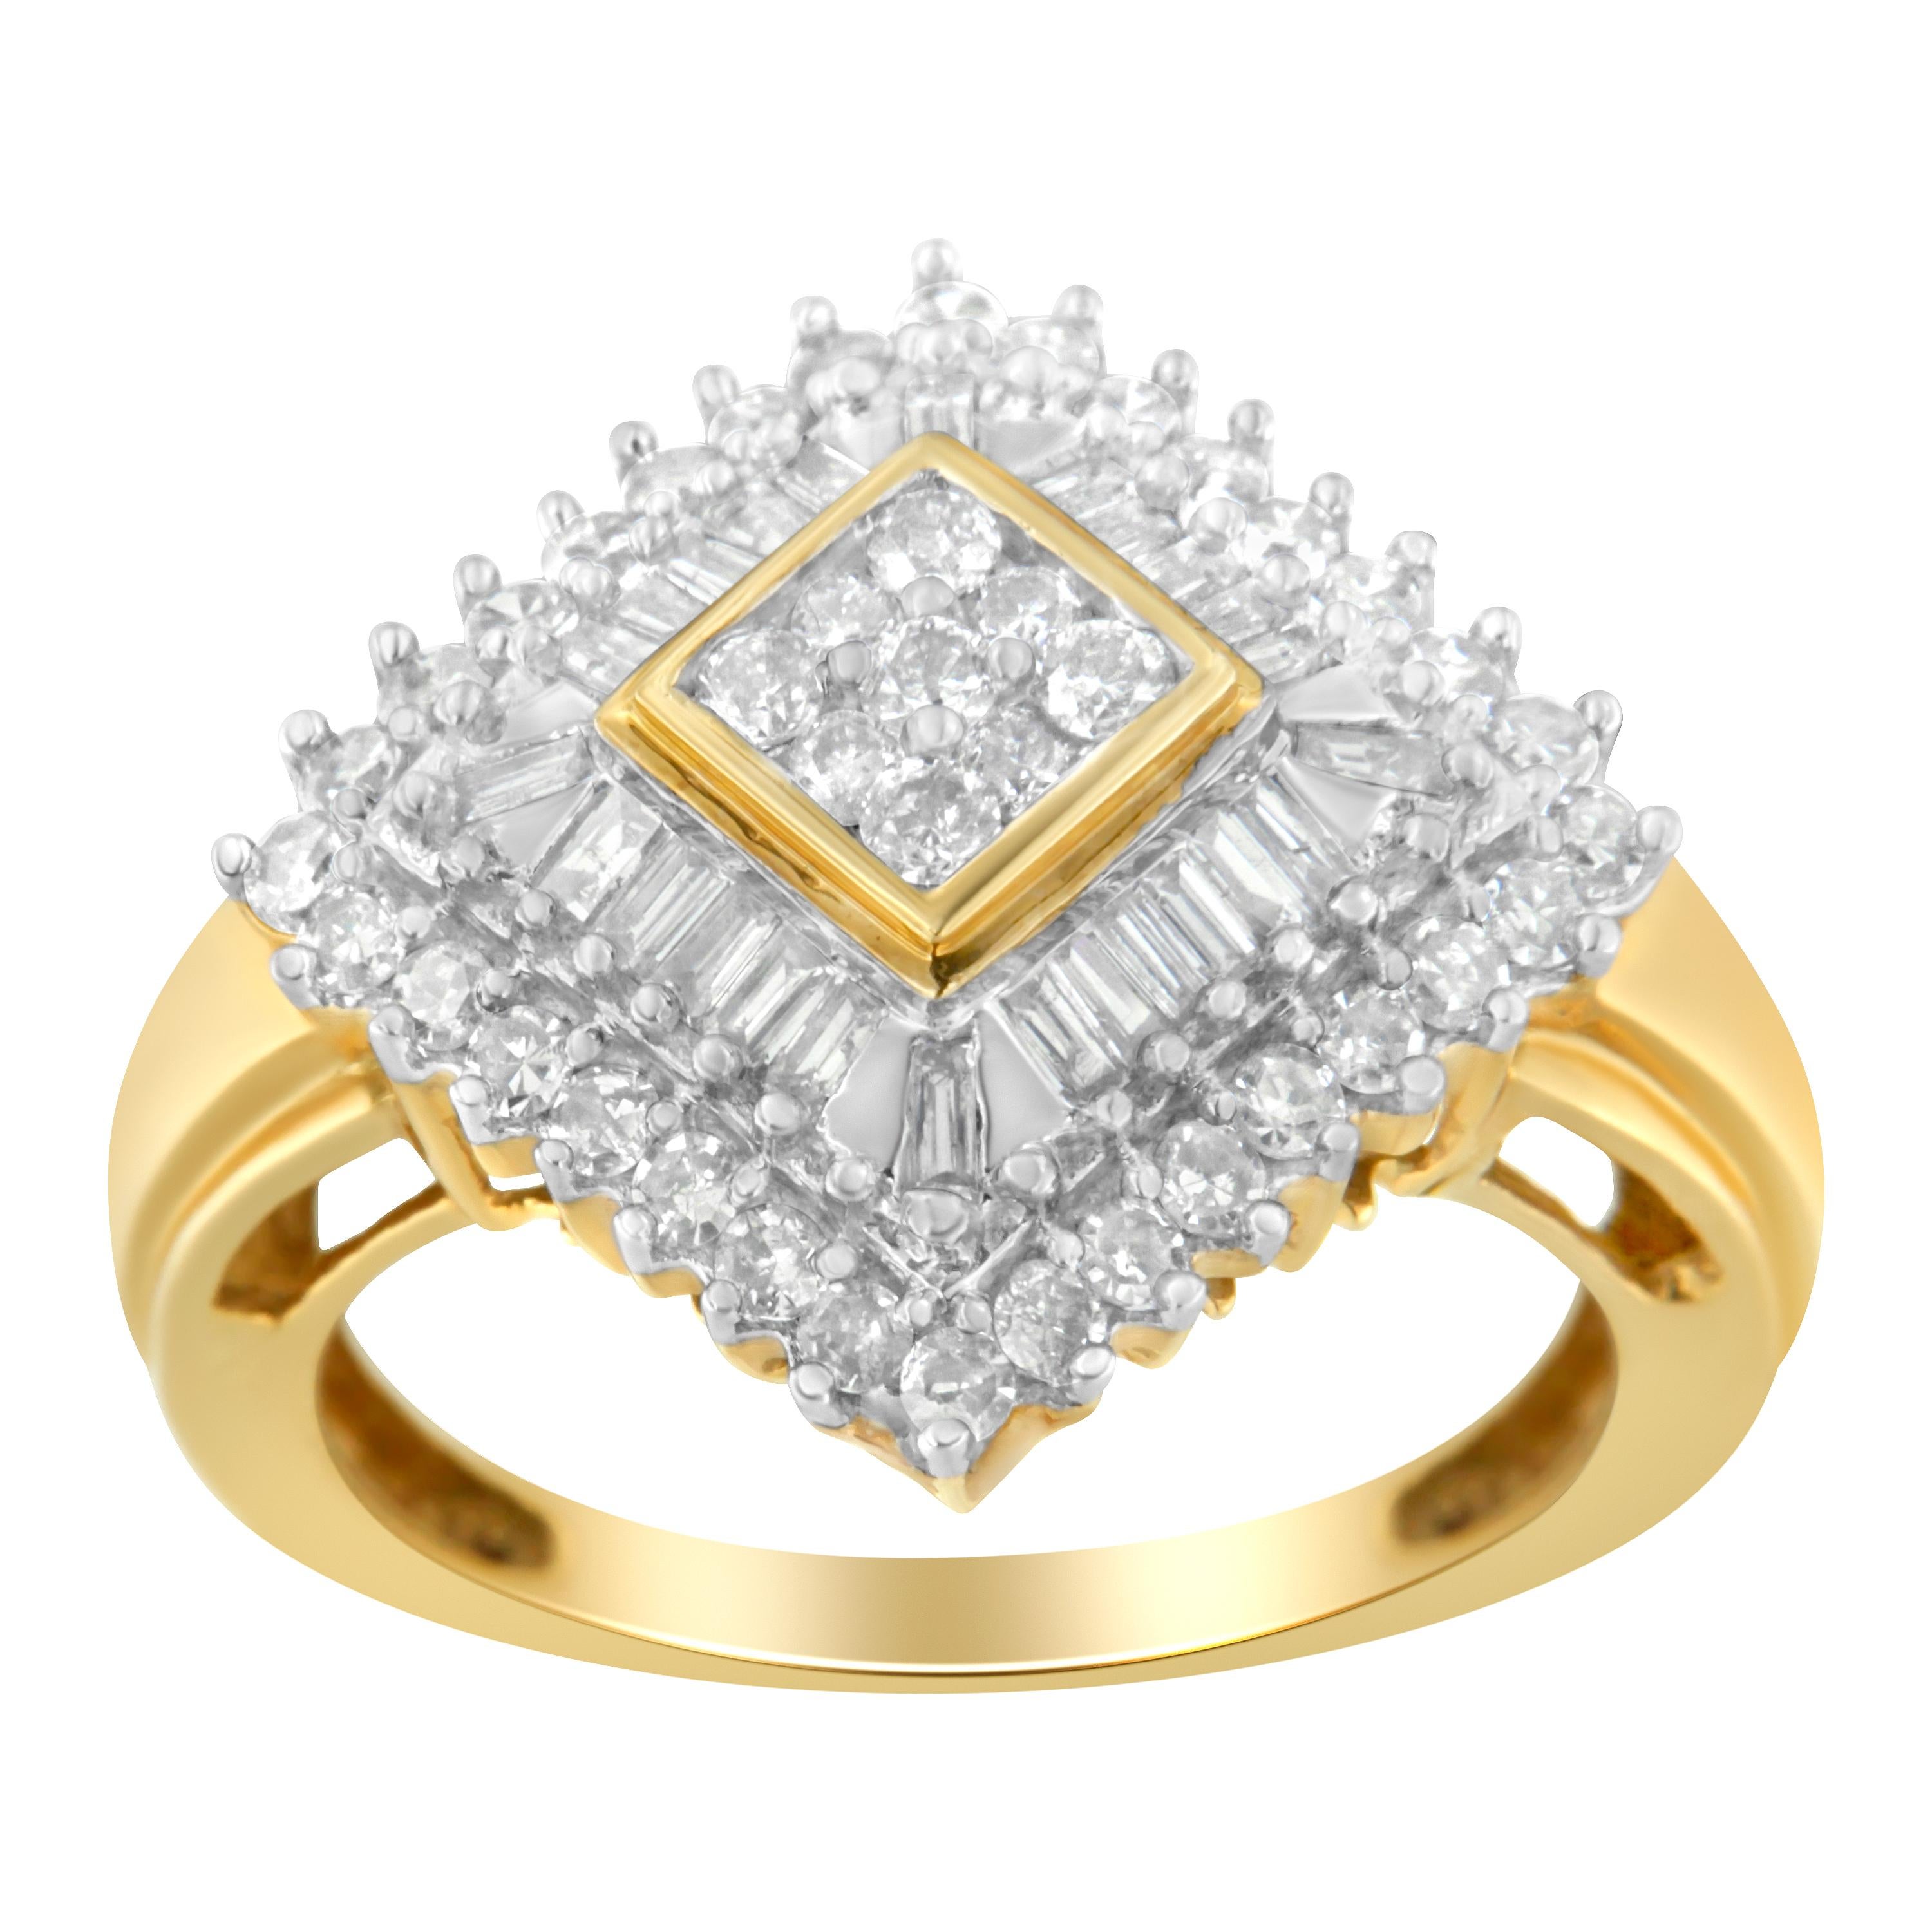 For Sale:  10K Yellow Gold 1.0 Carat Diamond Ballerina Ring 3